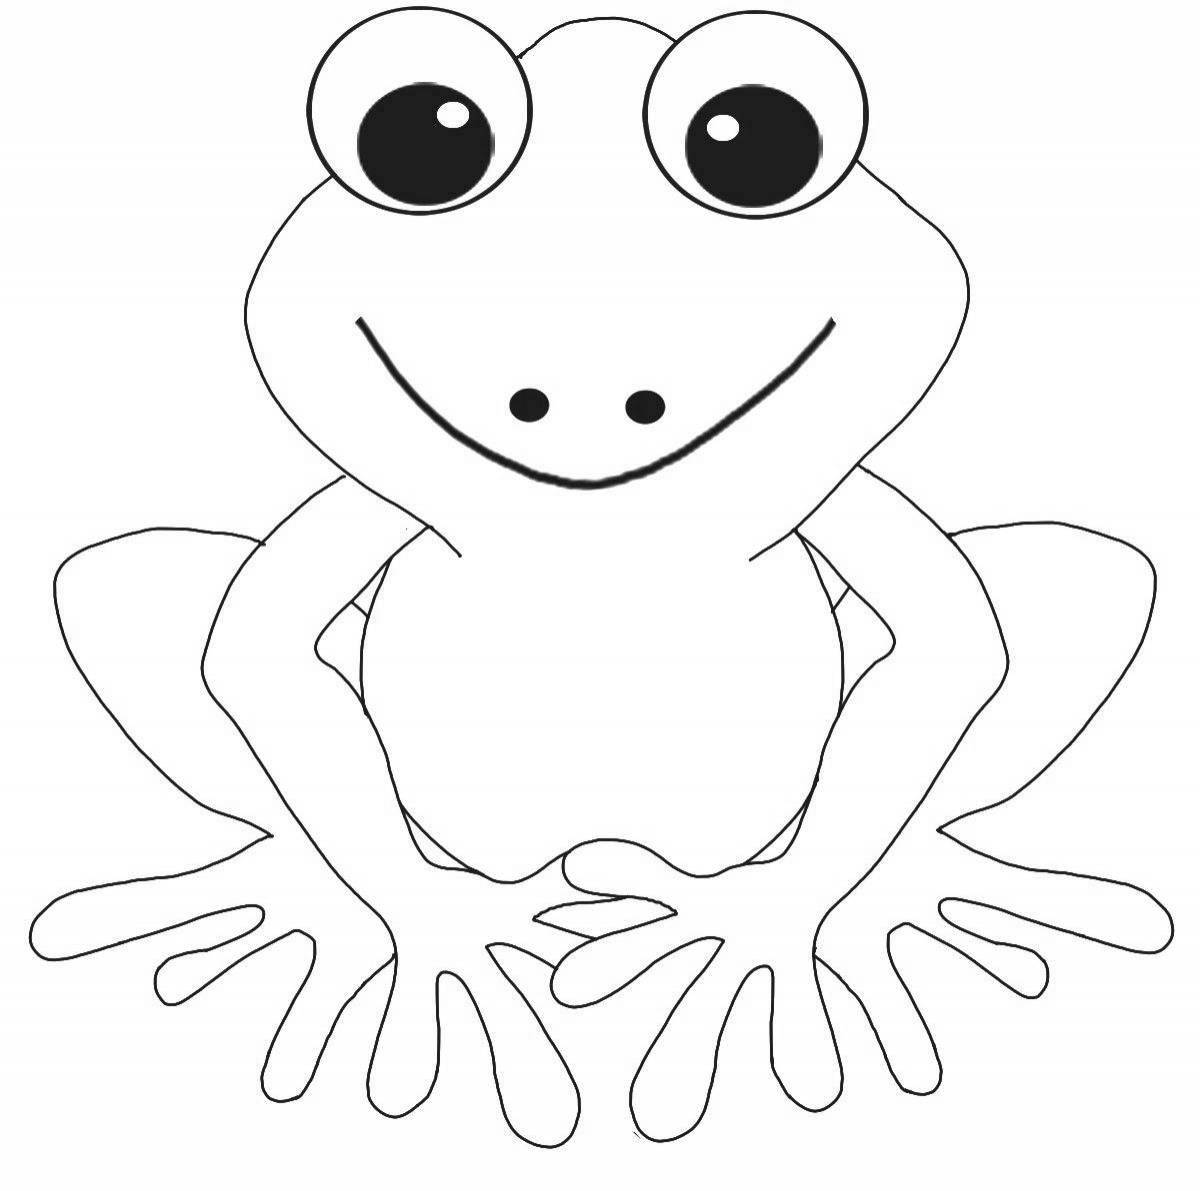 Цветная яркая лягушка раскраска для детей 3-4 лет